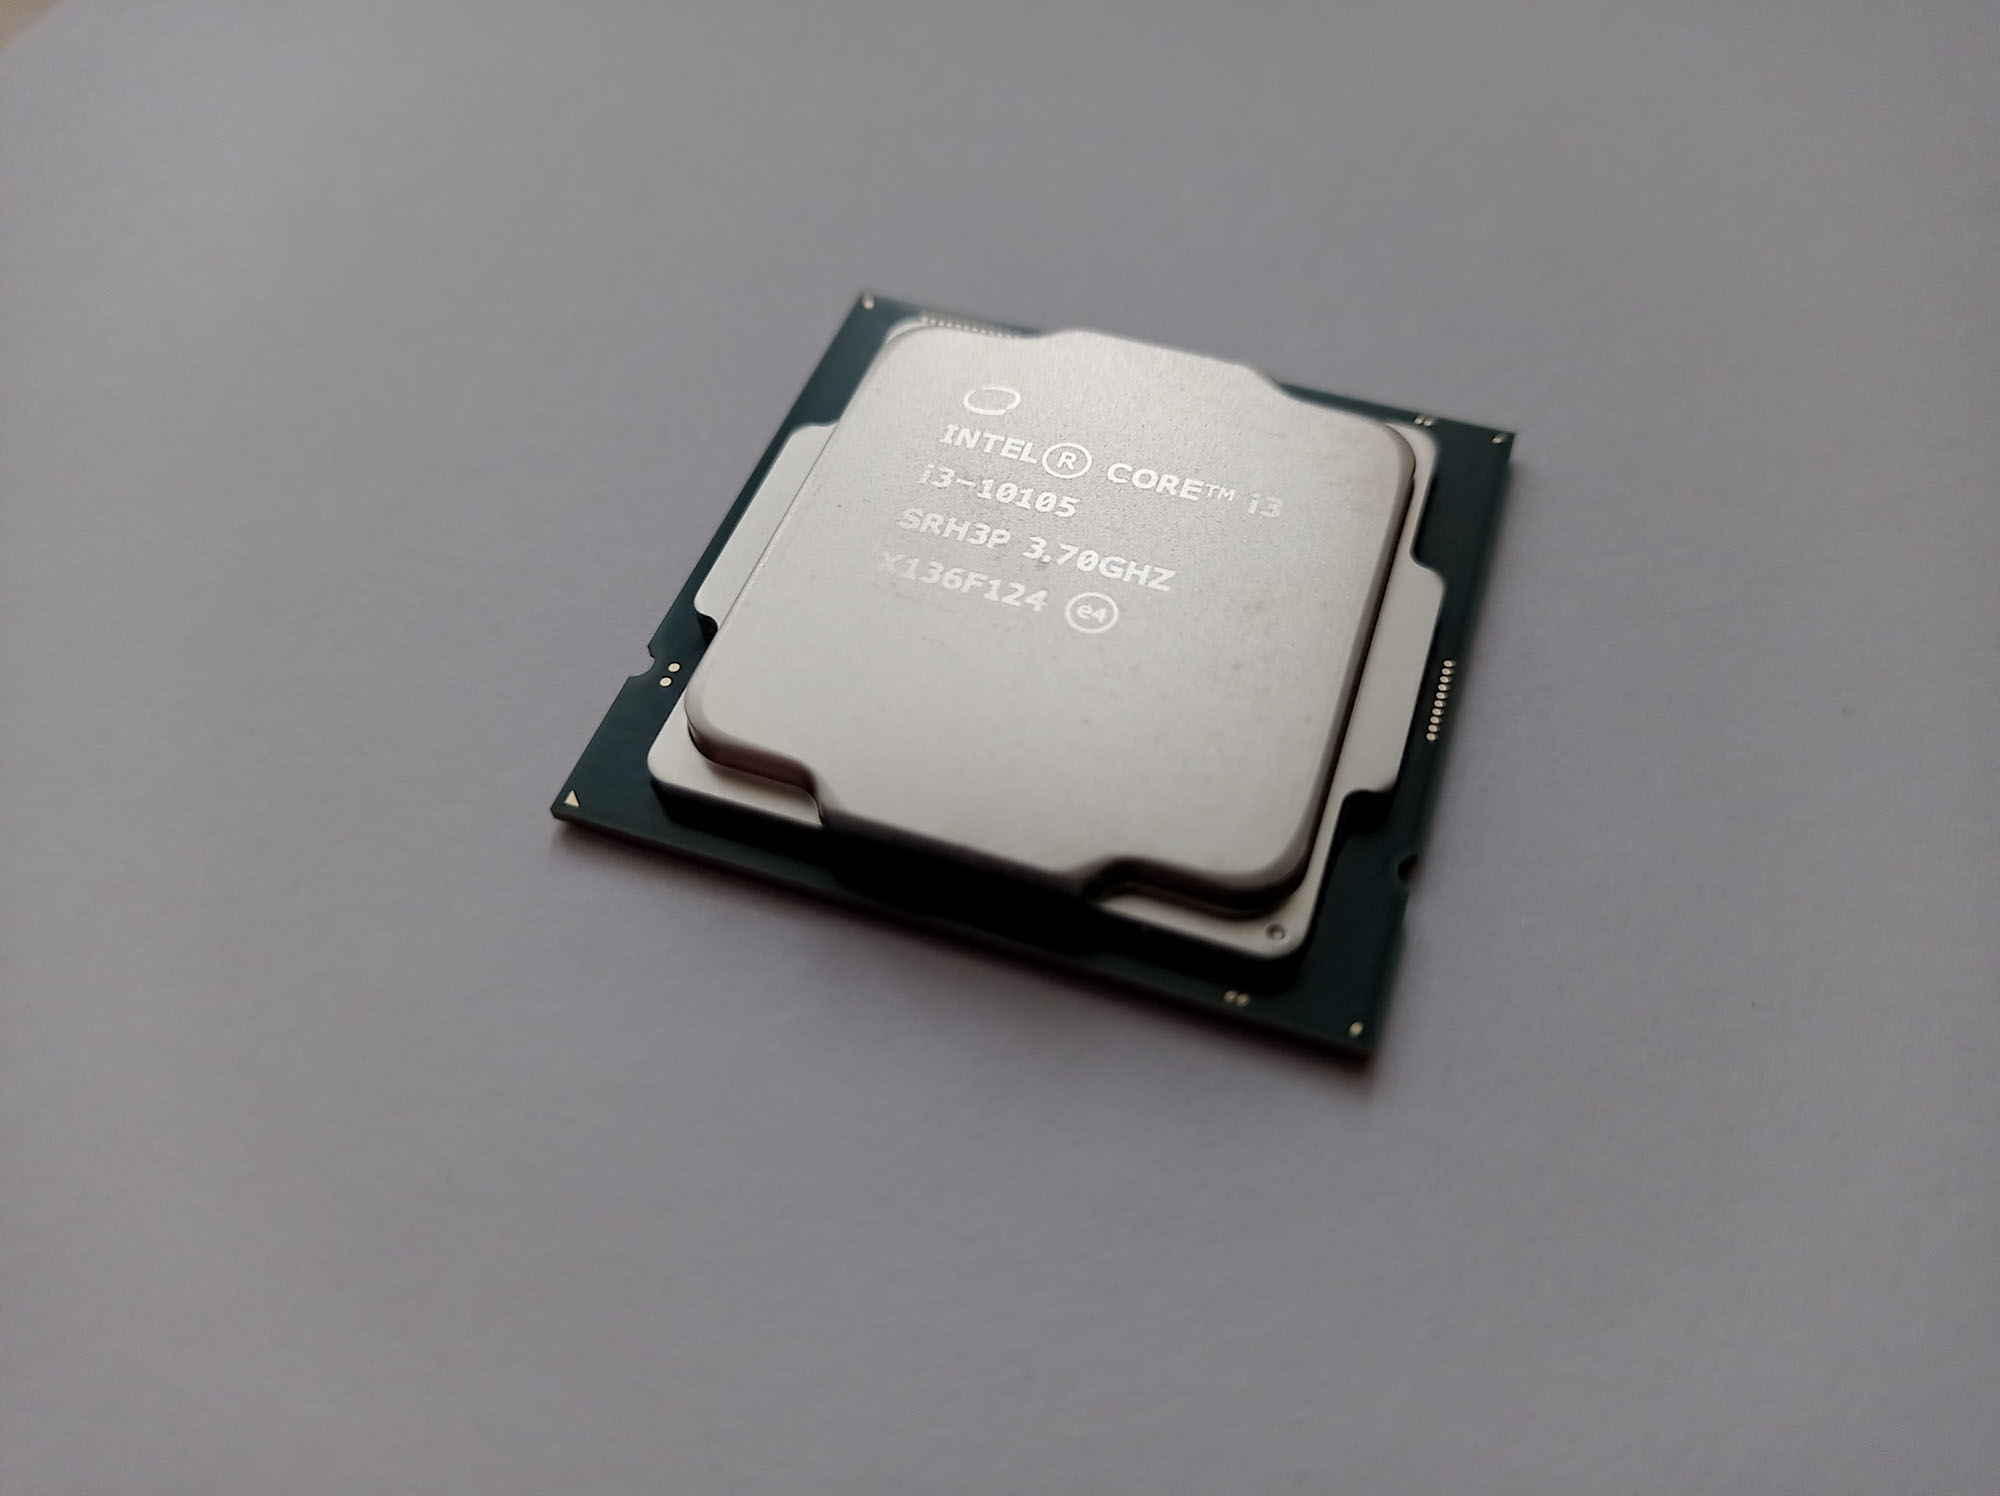 Intel i3 10105